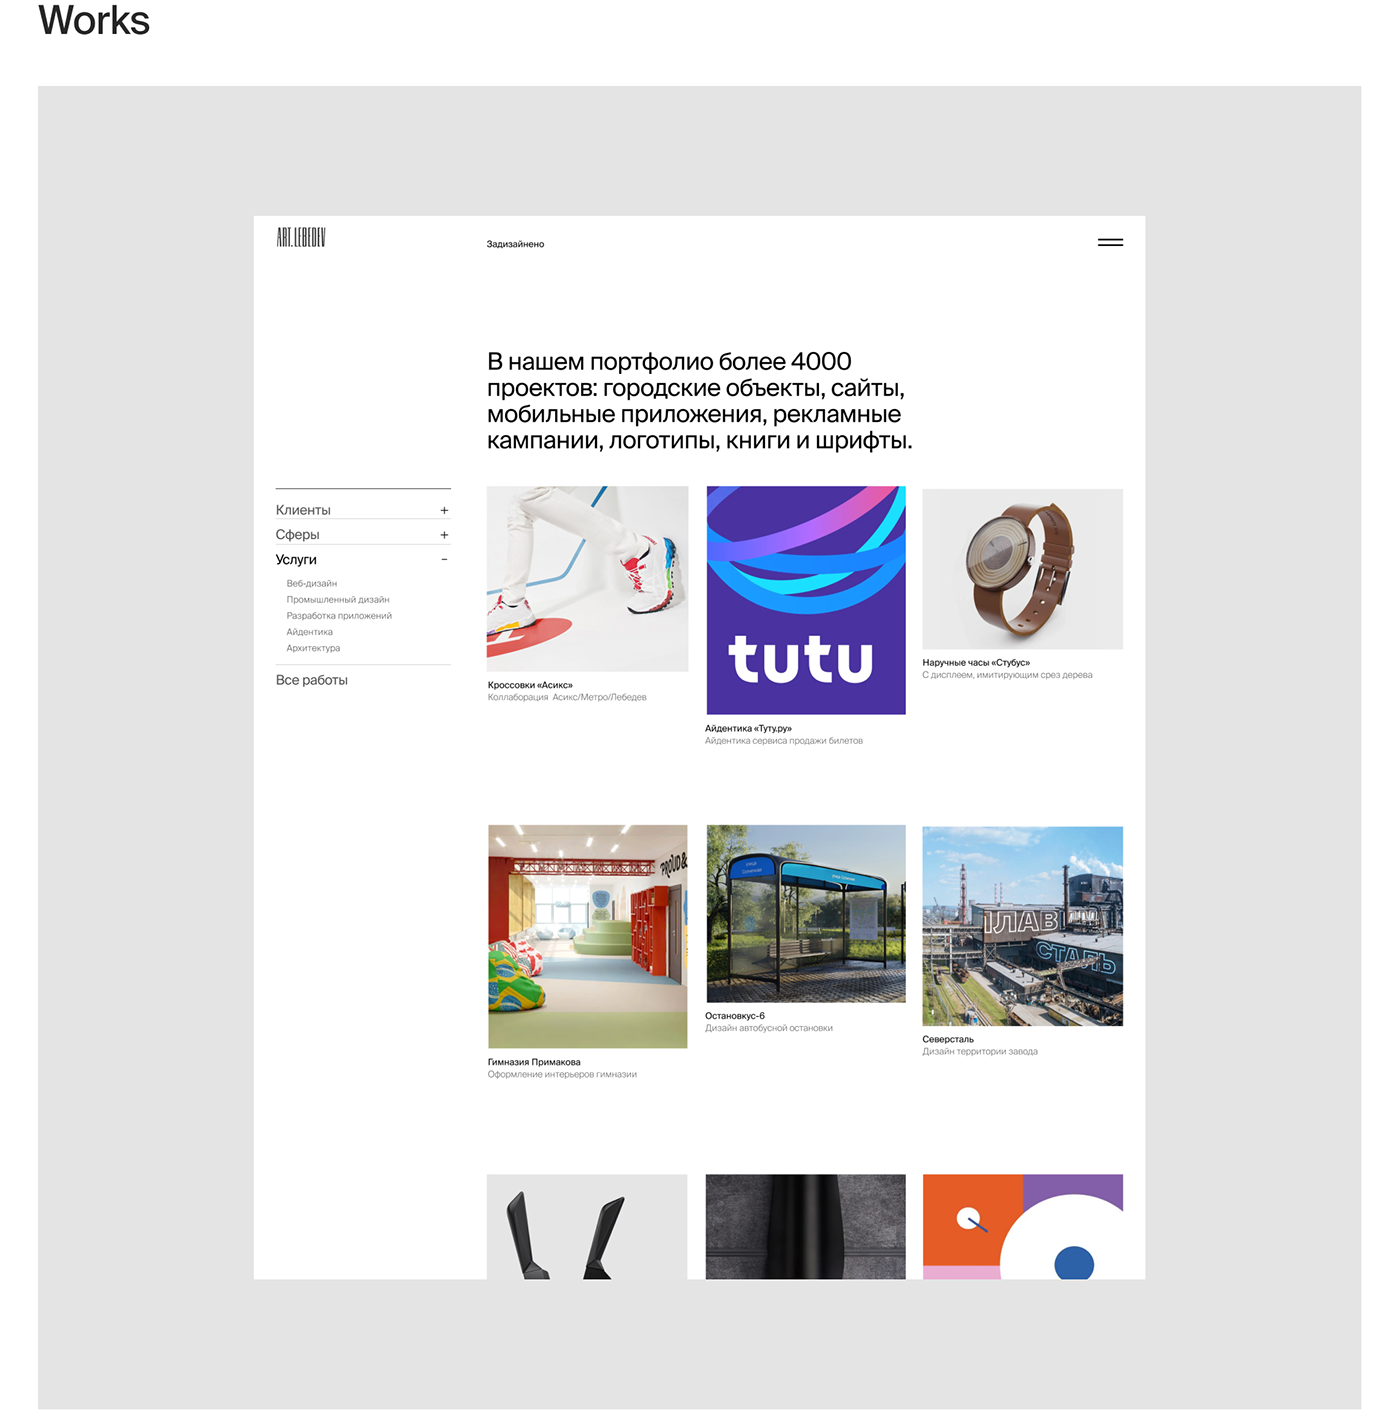 artlebedev grid lebedev portfolio redesign studio typography   ux/ui Web Webdesign